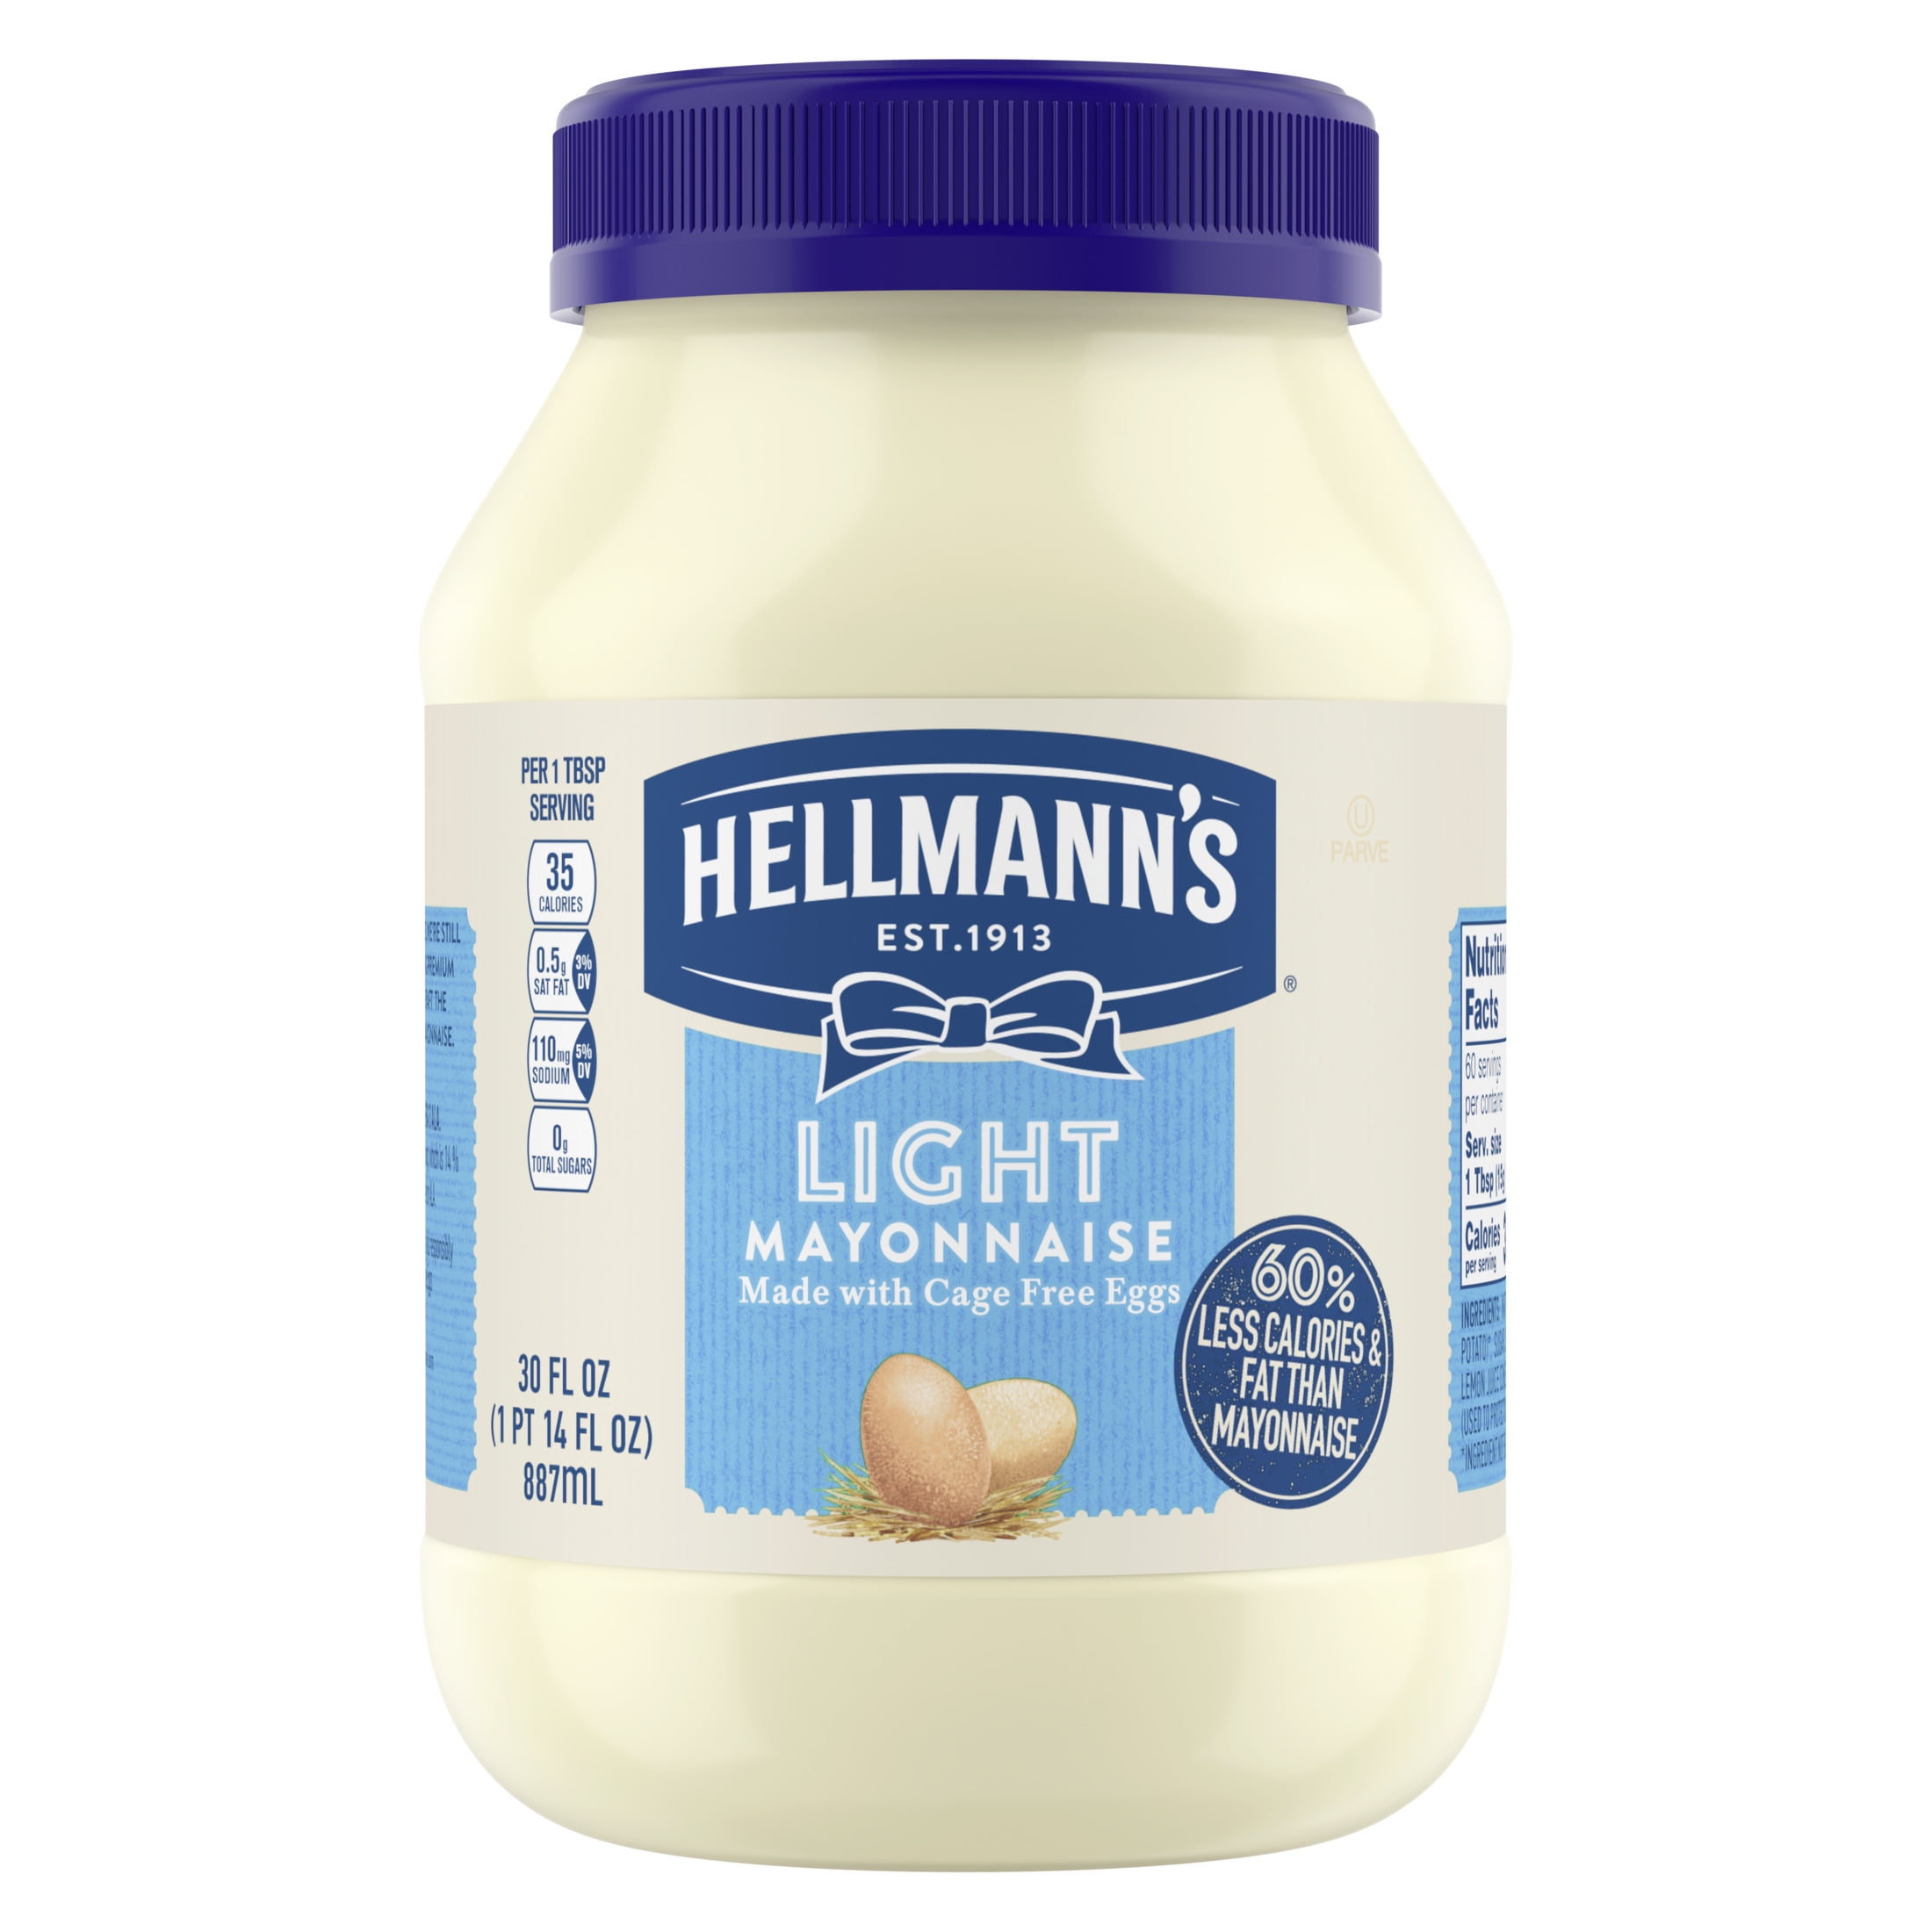 Hellmann's Light Mayonnaise Light Mayo 30 oz ct - Walmart.com